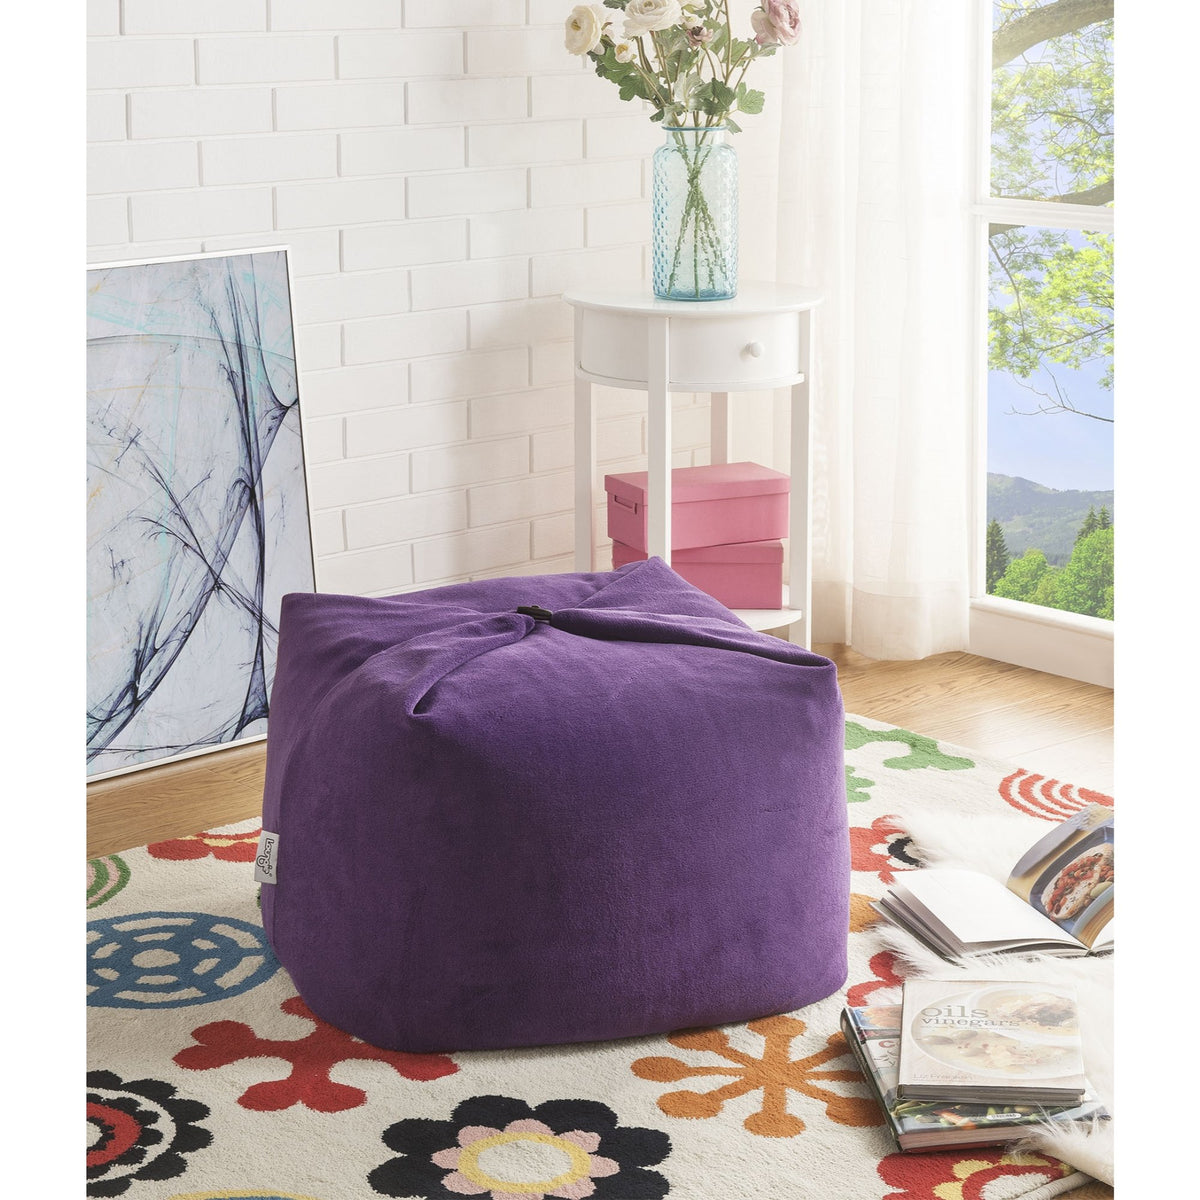 Bean Bag Chair/Ottoman/Floor Pillow 3-in-1 - Bean Bag Chair/Ottoman/Floor Pillow 3-in-1